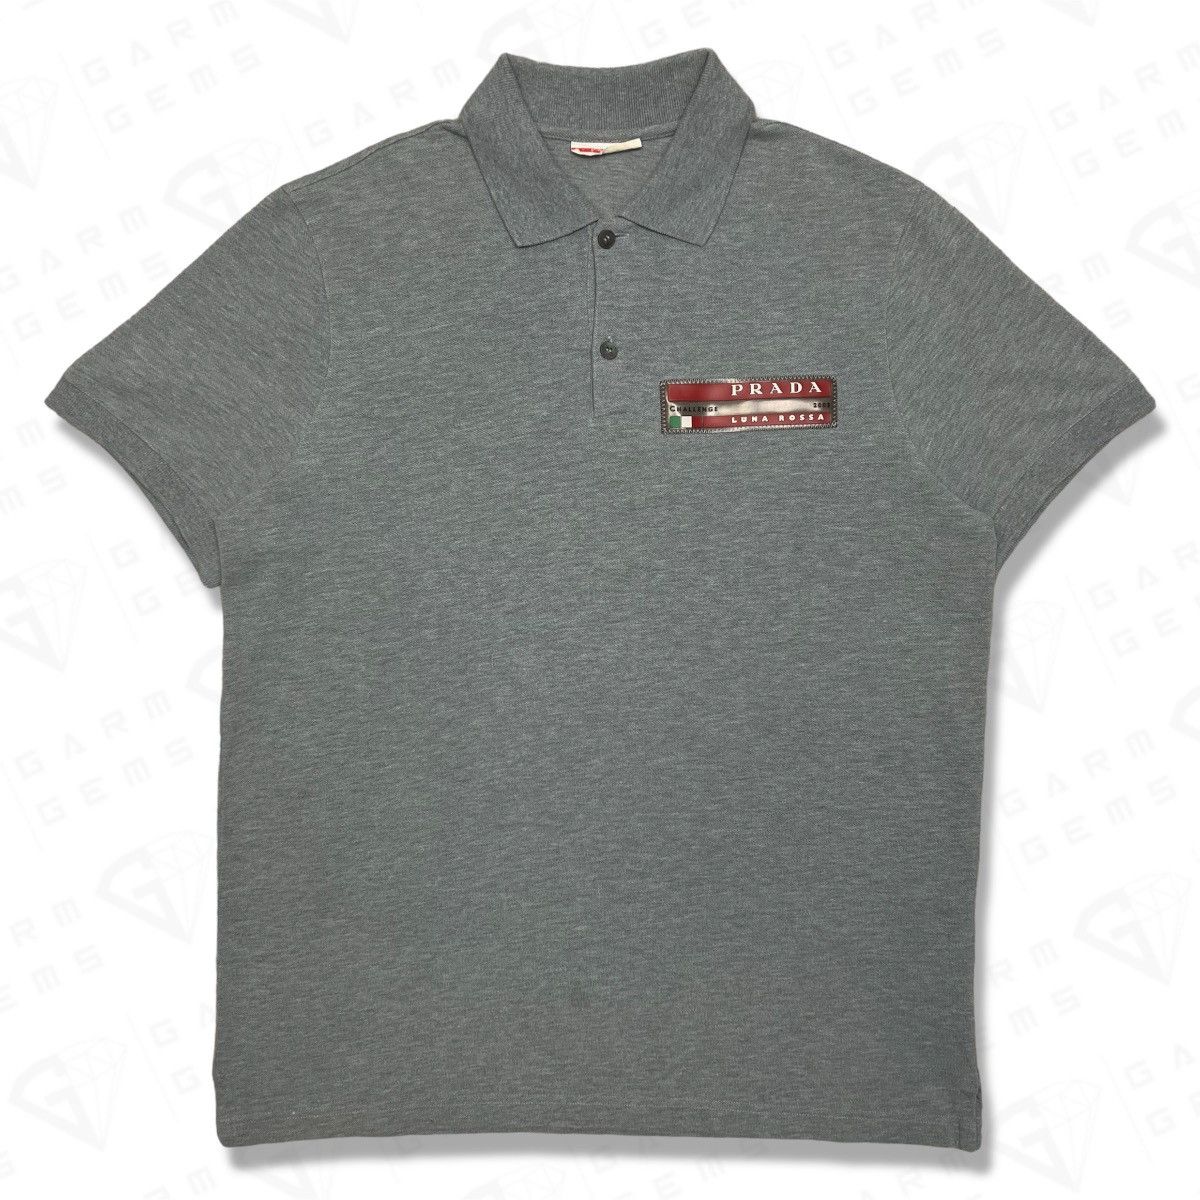 Prada navy cotton shirts - Gem